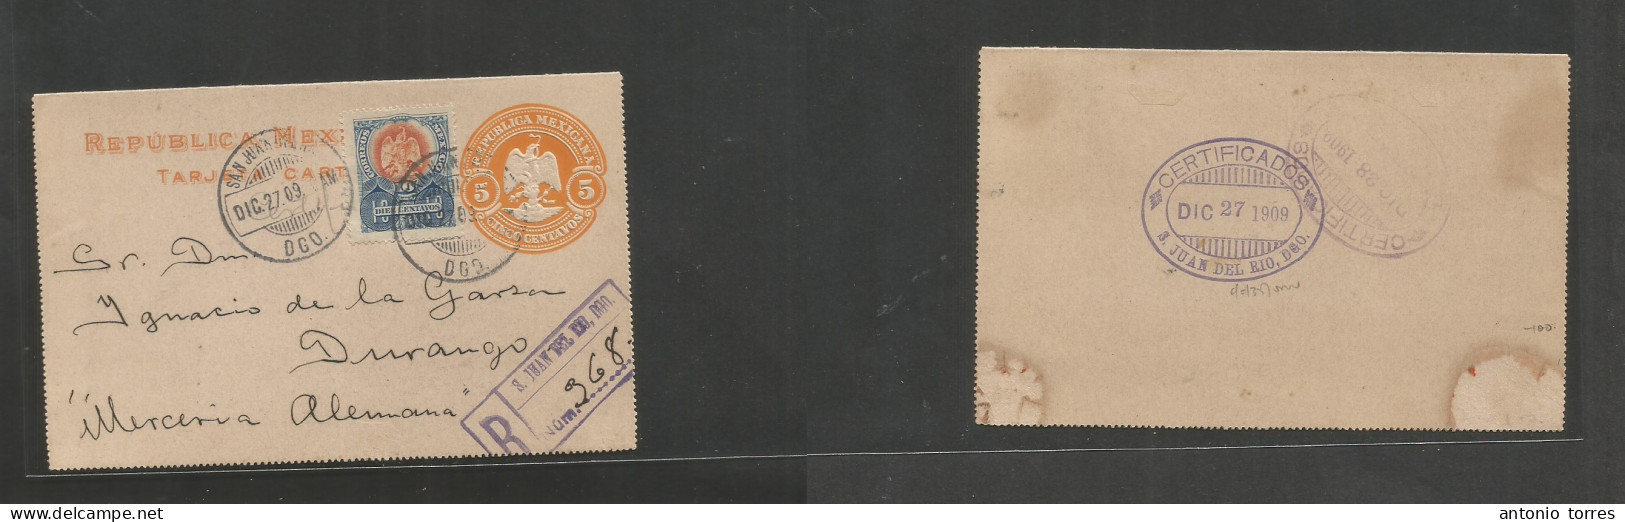 Mexico - Stationery. 1909 (27 Dic) San Juan Del Rio - Durango (28 Dic) Registered 5c Orange Stat Lettersheet + 10c Adtl, - México